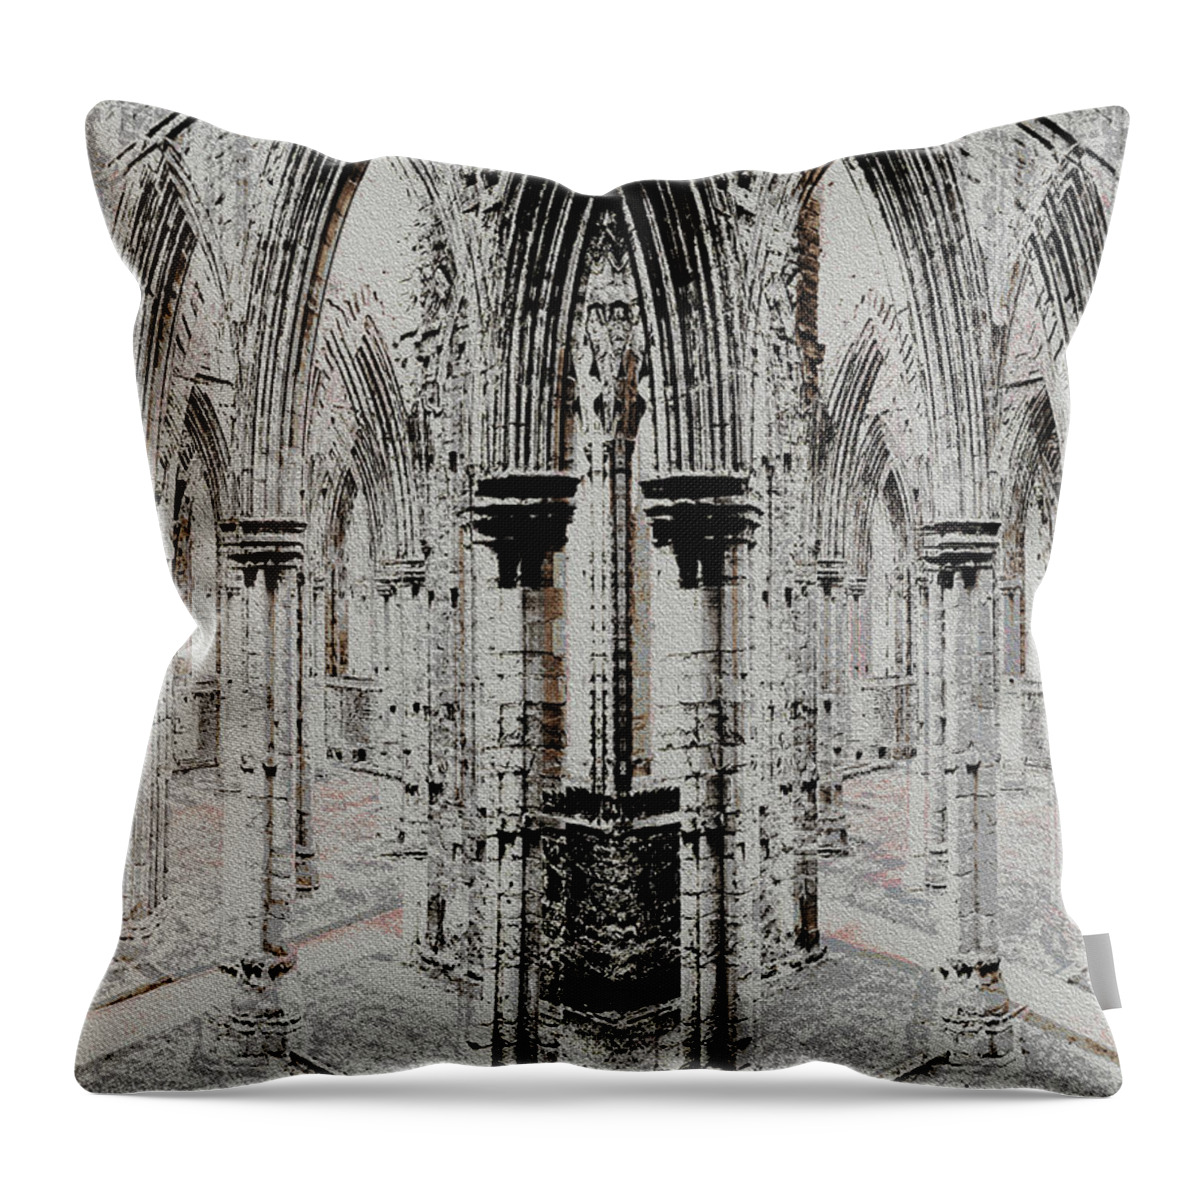 Tintern Abbey Throw Pillow featuring the digital art Sanctuary by Stephanie Grant